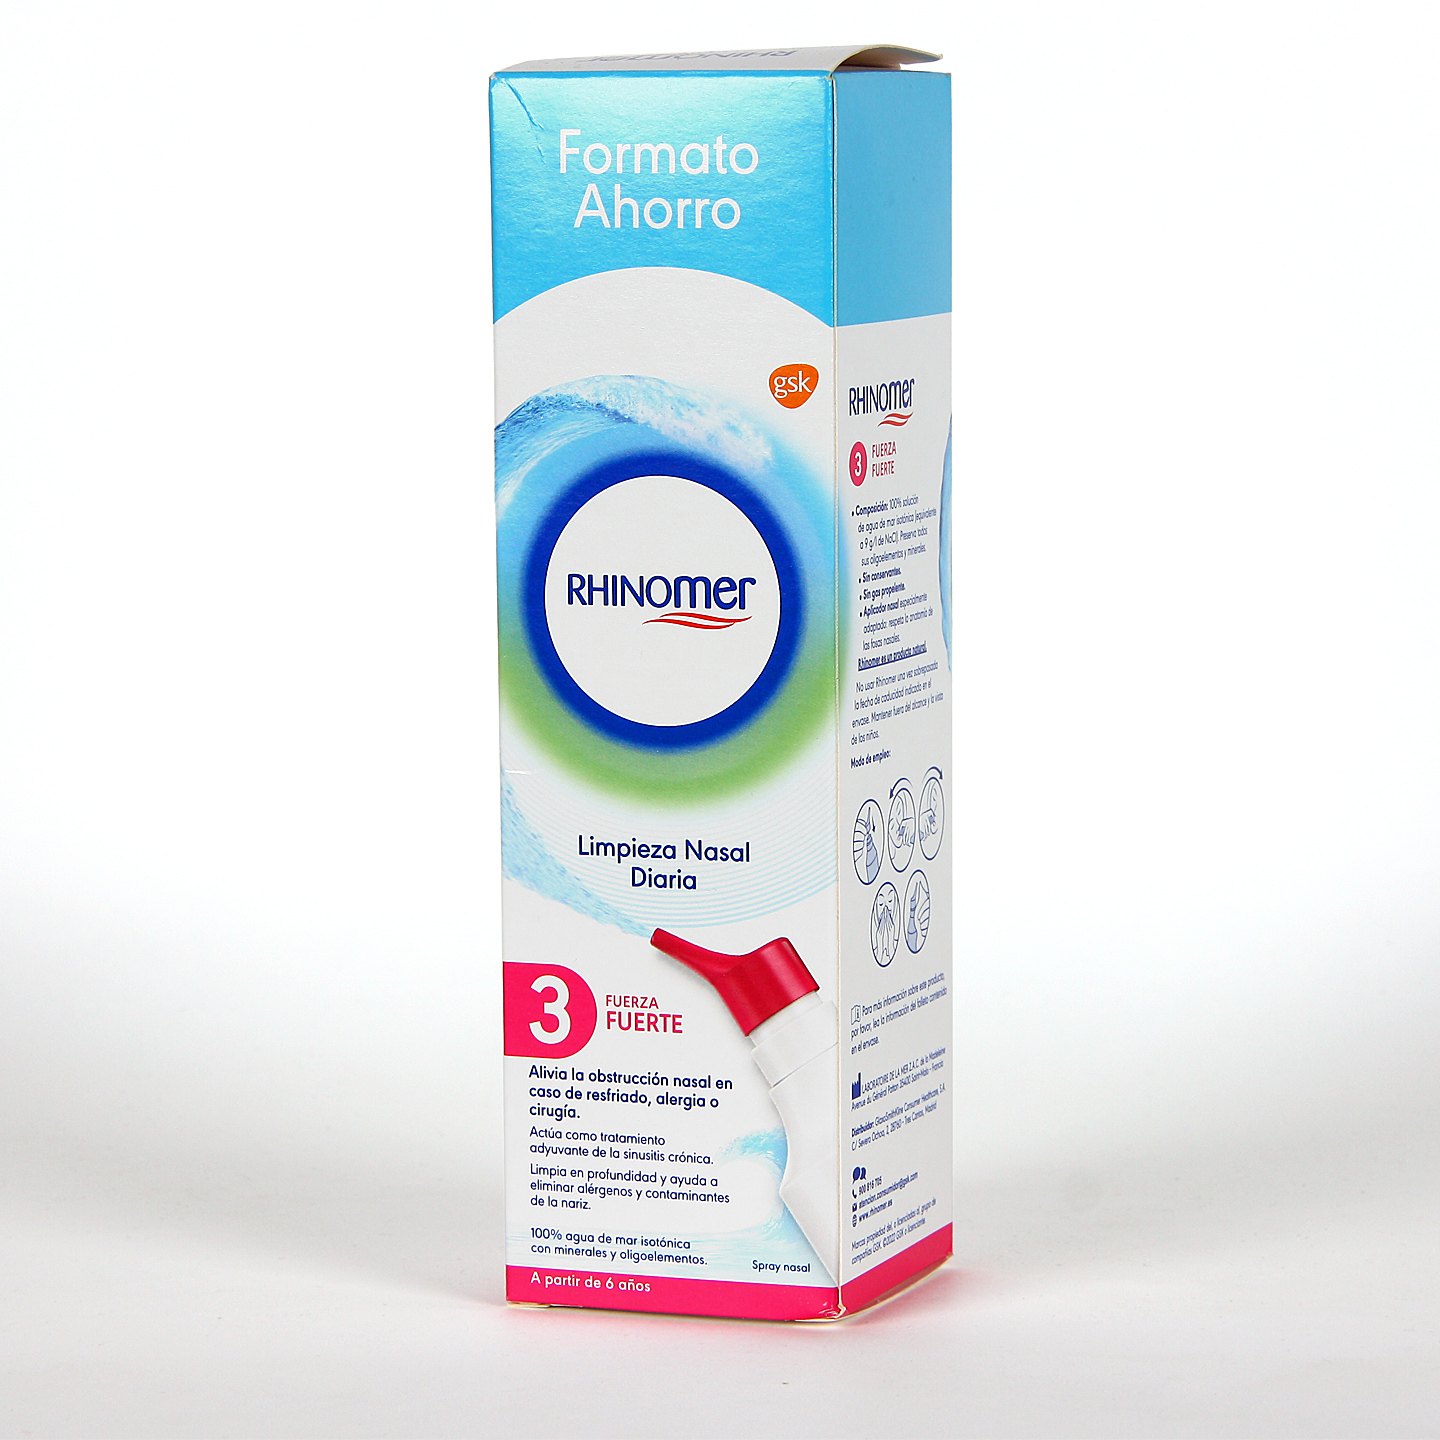 https://farmaciajimenez.com/storage/products/rhinomer-fuerza-3-fuerte-33-gratis/rhinomer-limpieza-nasal-diaria-fuerza-3-1440.jpg